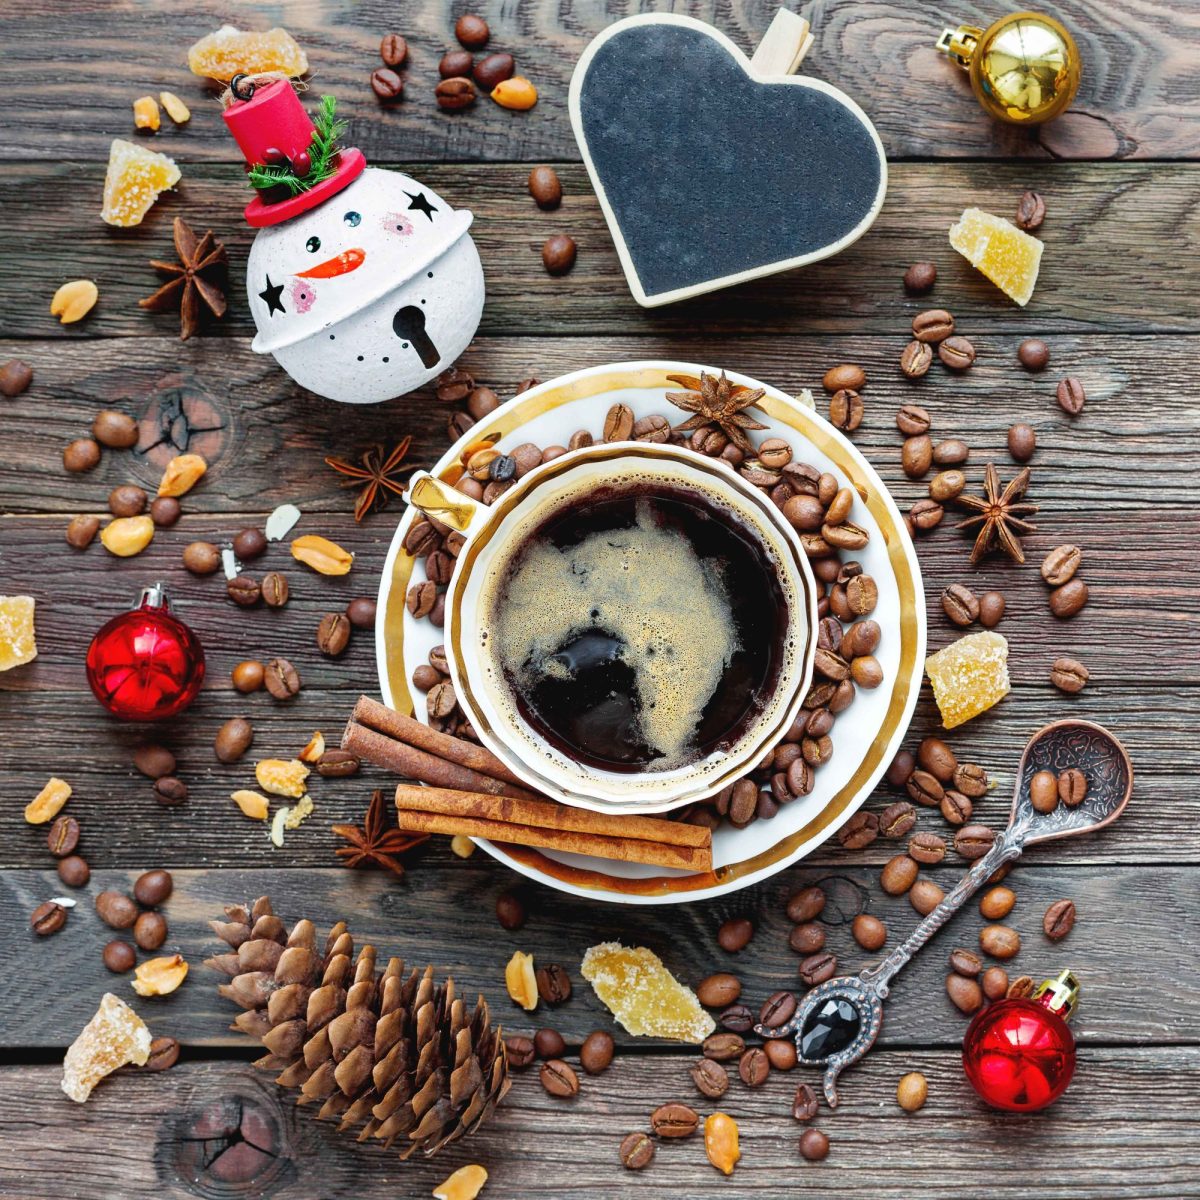 Plano Office Coffee | McKinney Healthy Foods | Dallas Break Room Holiday Solutions